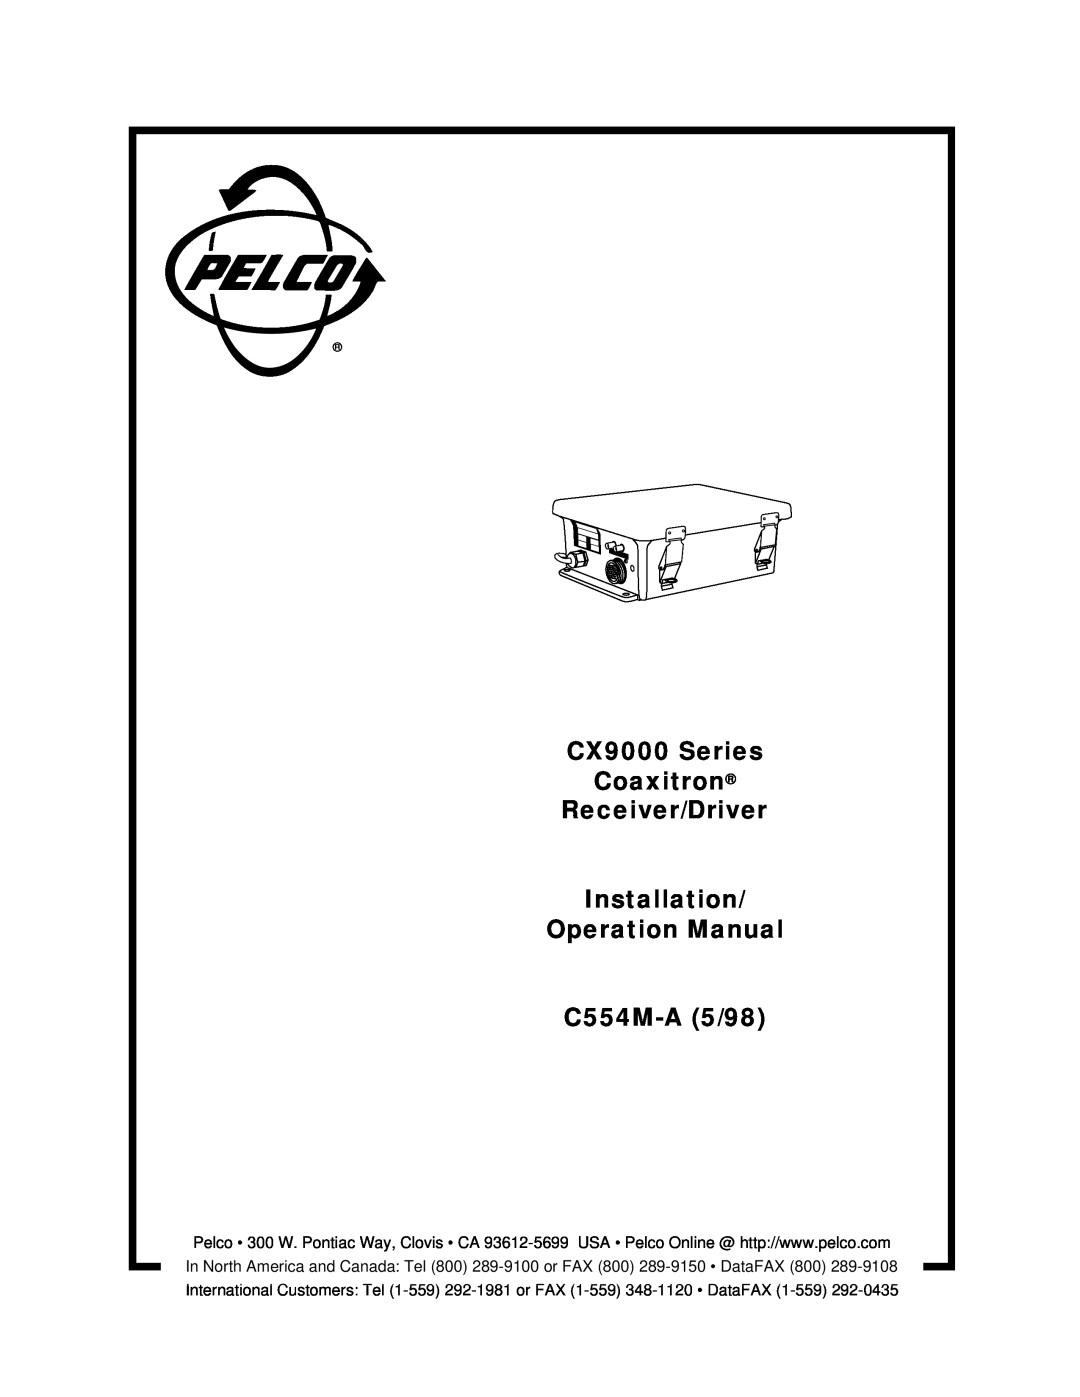 Pelco C554M-A (5/98) operation manual CX9000 Series Coaxitron Receiver/Driver Installation Operation Manual, C554M-A 5/98 